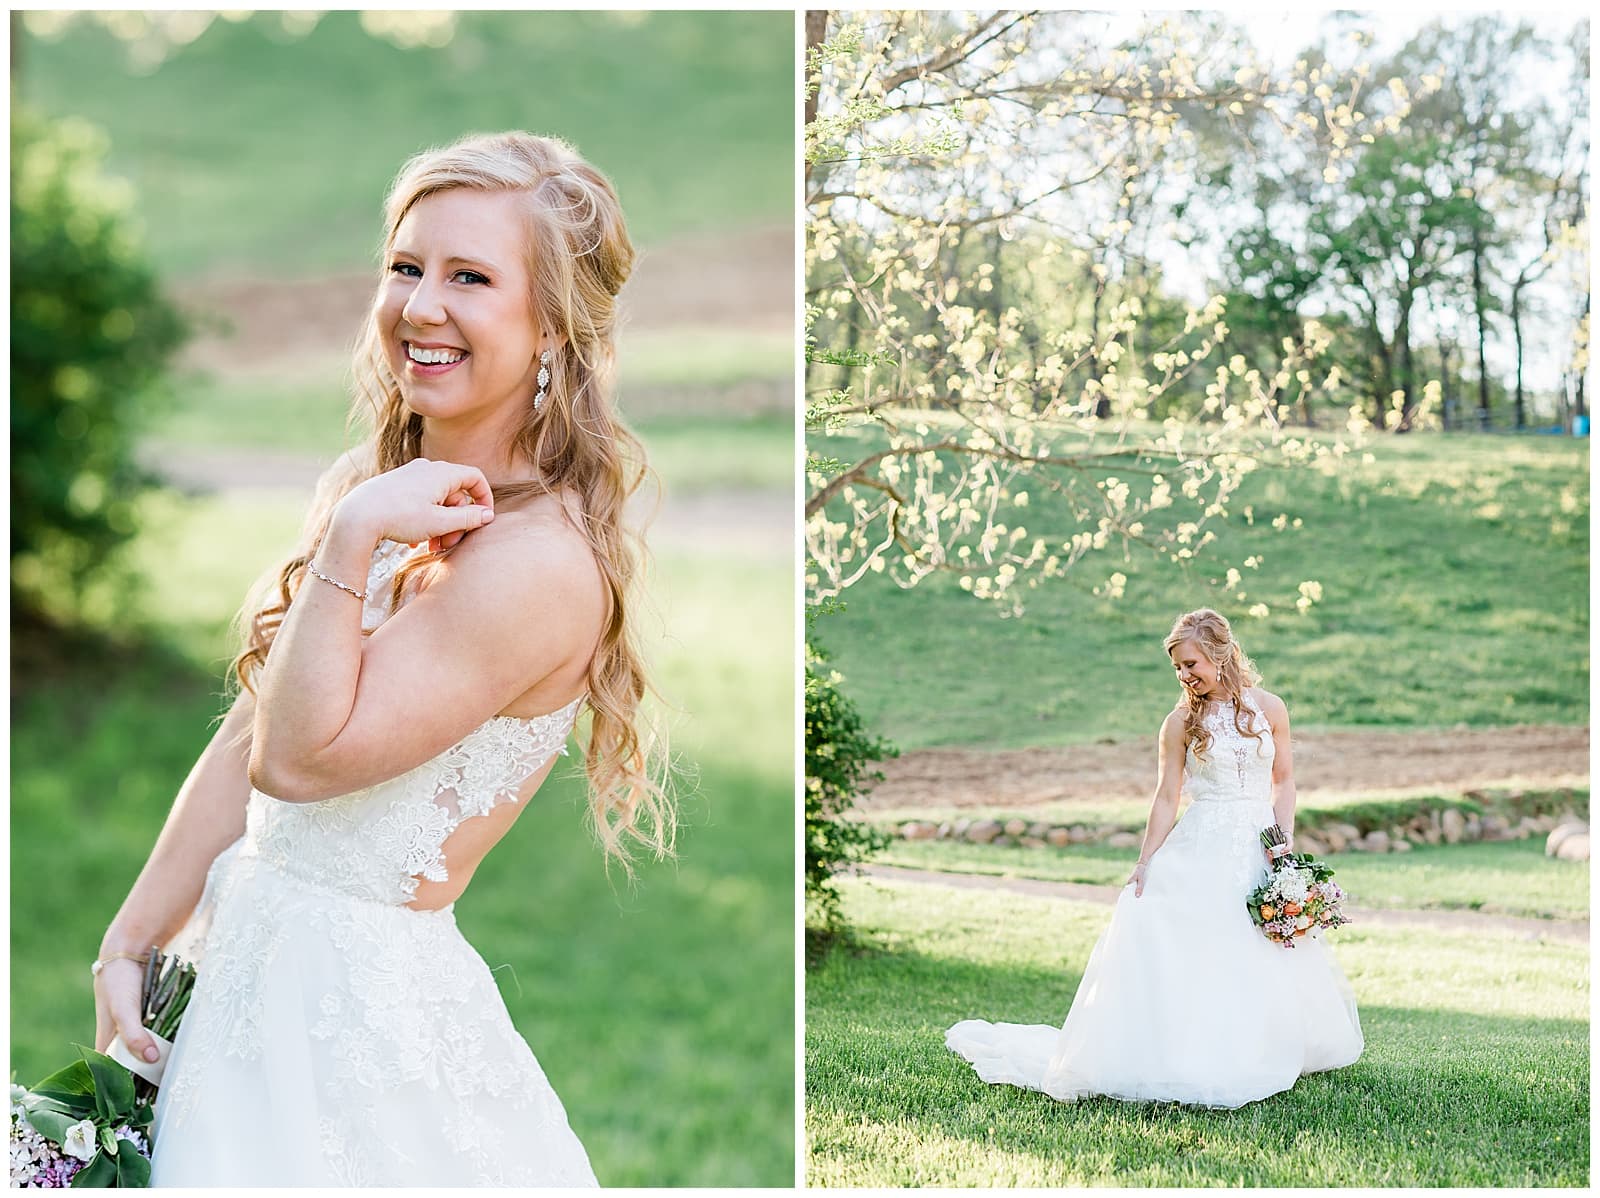 Danielle-Defayette-Photography-Cherokee-Creek-Farm-Bridal-Wedding-Portraits_0013.jpg